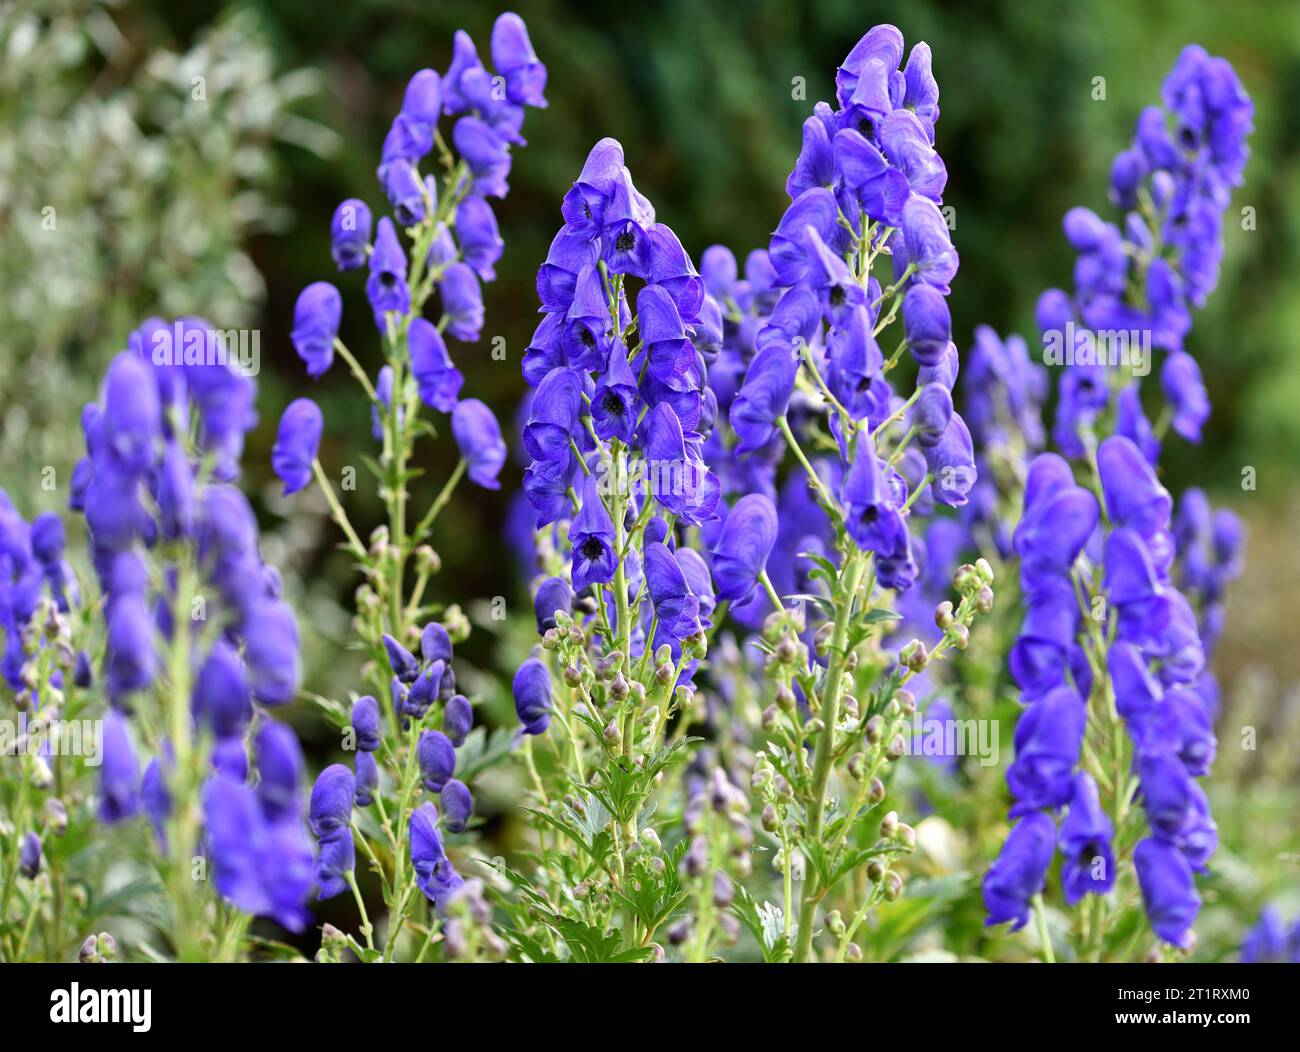 The purple flowers of Monkshood Arendsii. Stock Photo